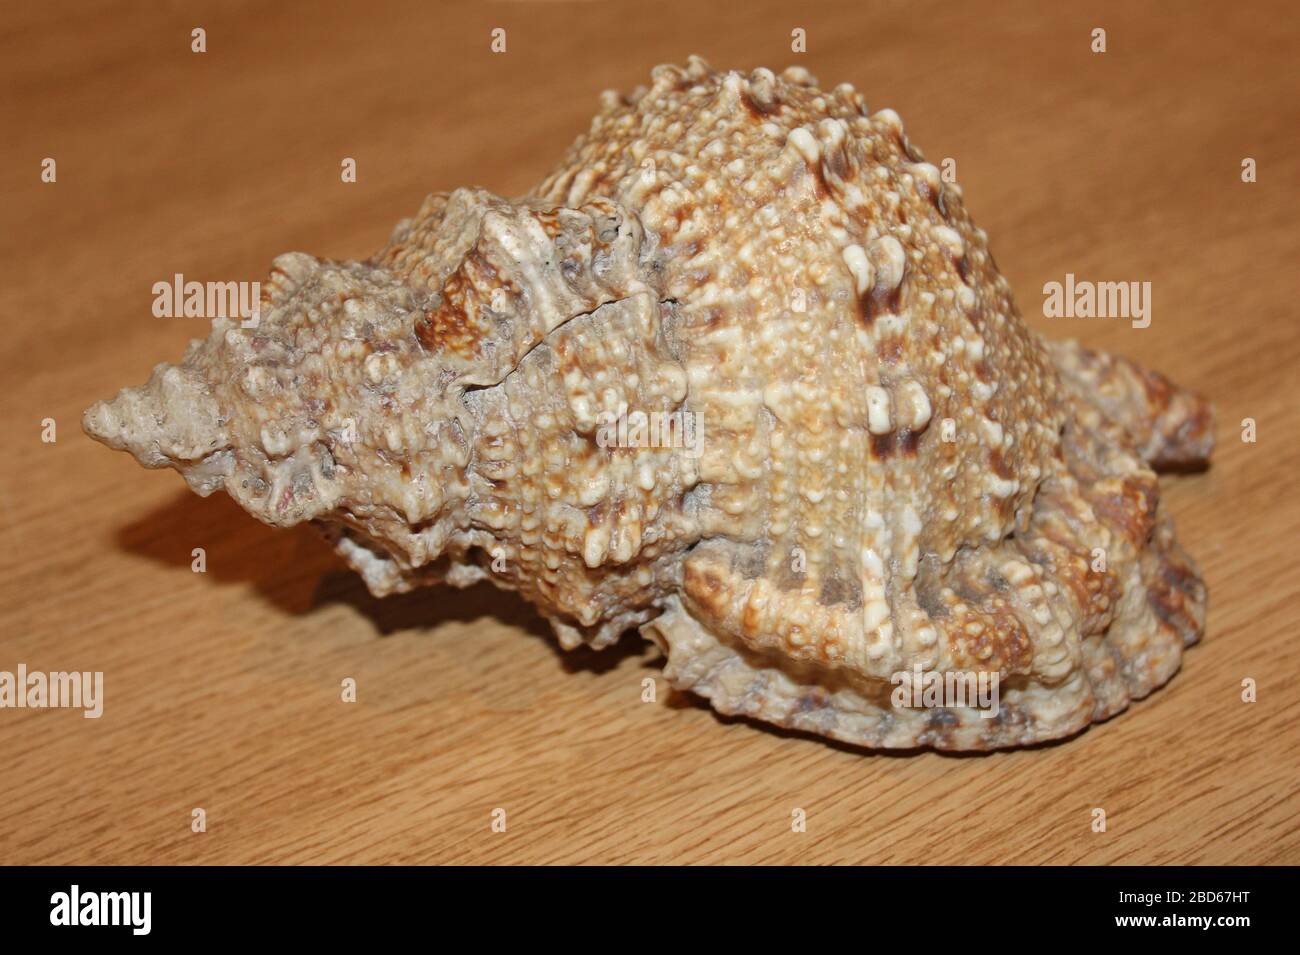 Frog Shell a.k.a. Frog Snail - Bursidae sp. a marine predatory gastropod snail Stock Photo